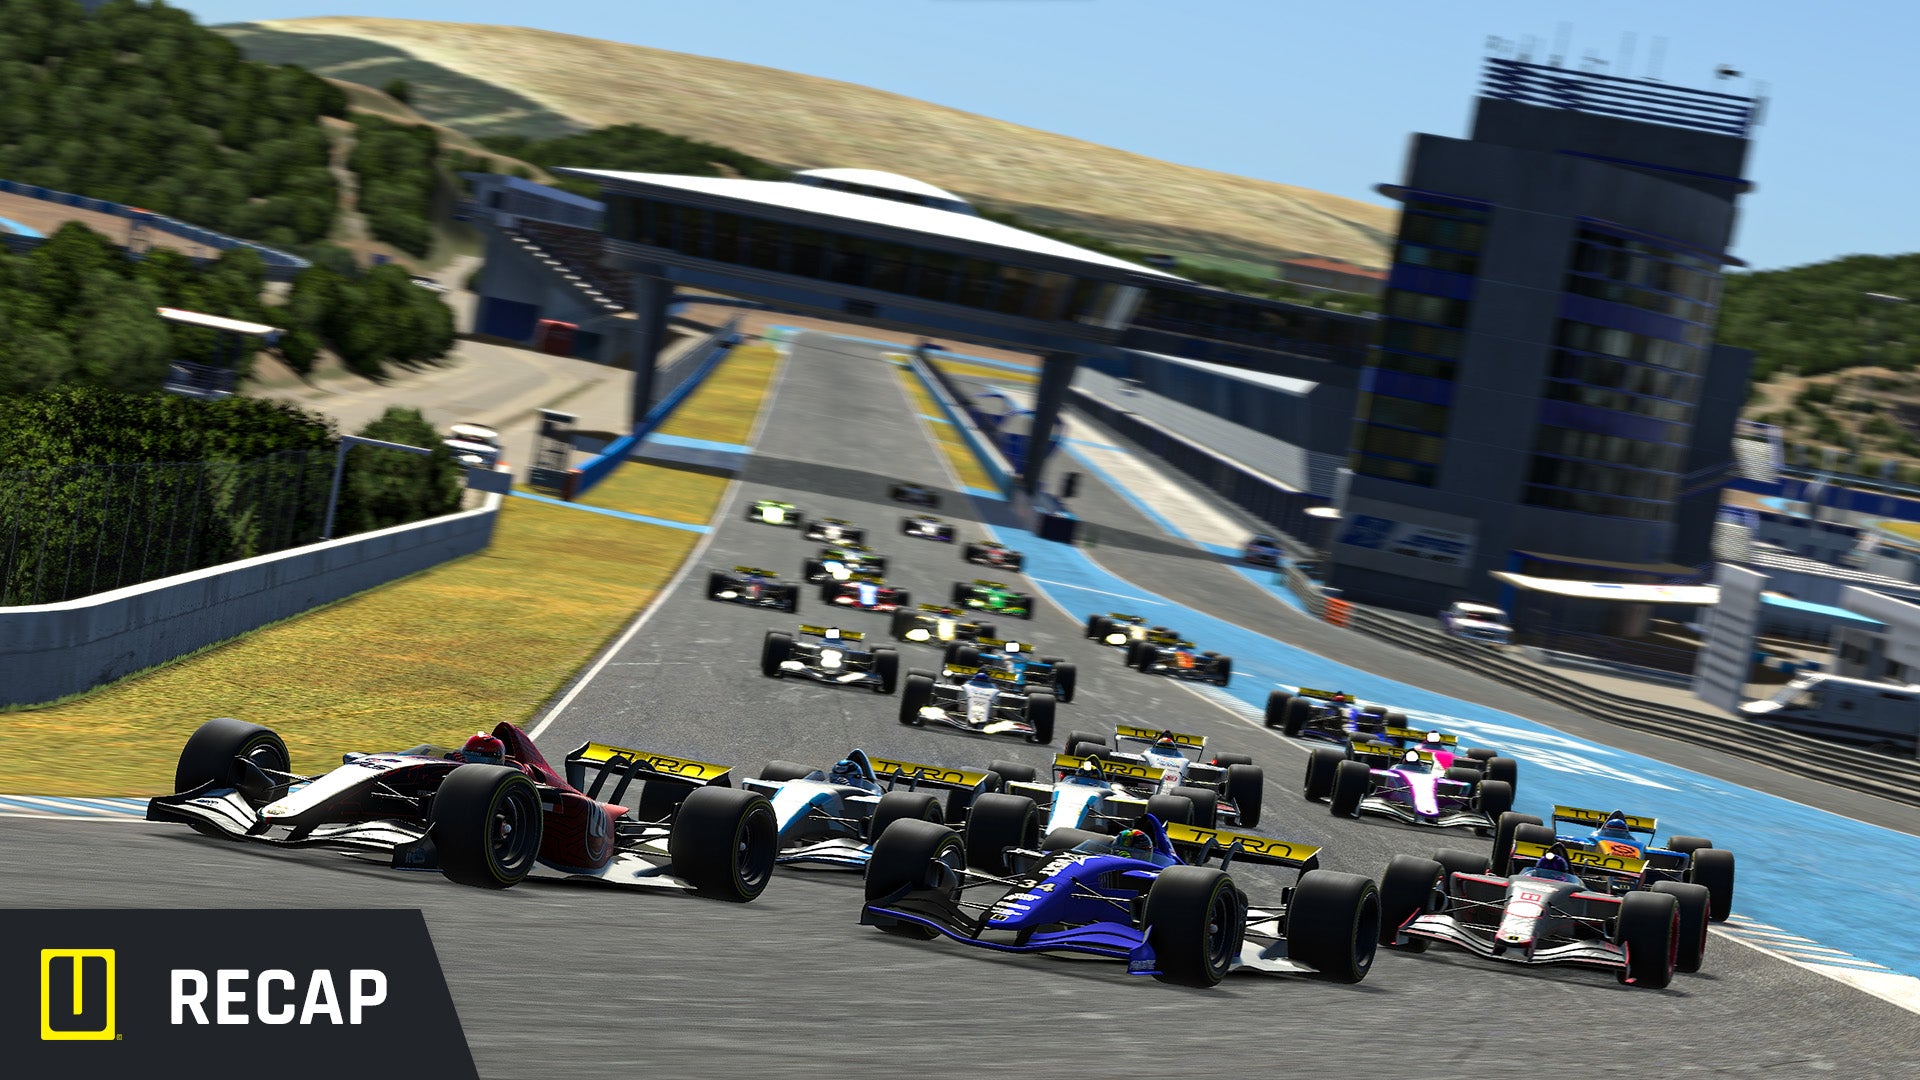 Grand Prix Turn Racing iRacing Series Race 2 Recap